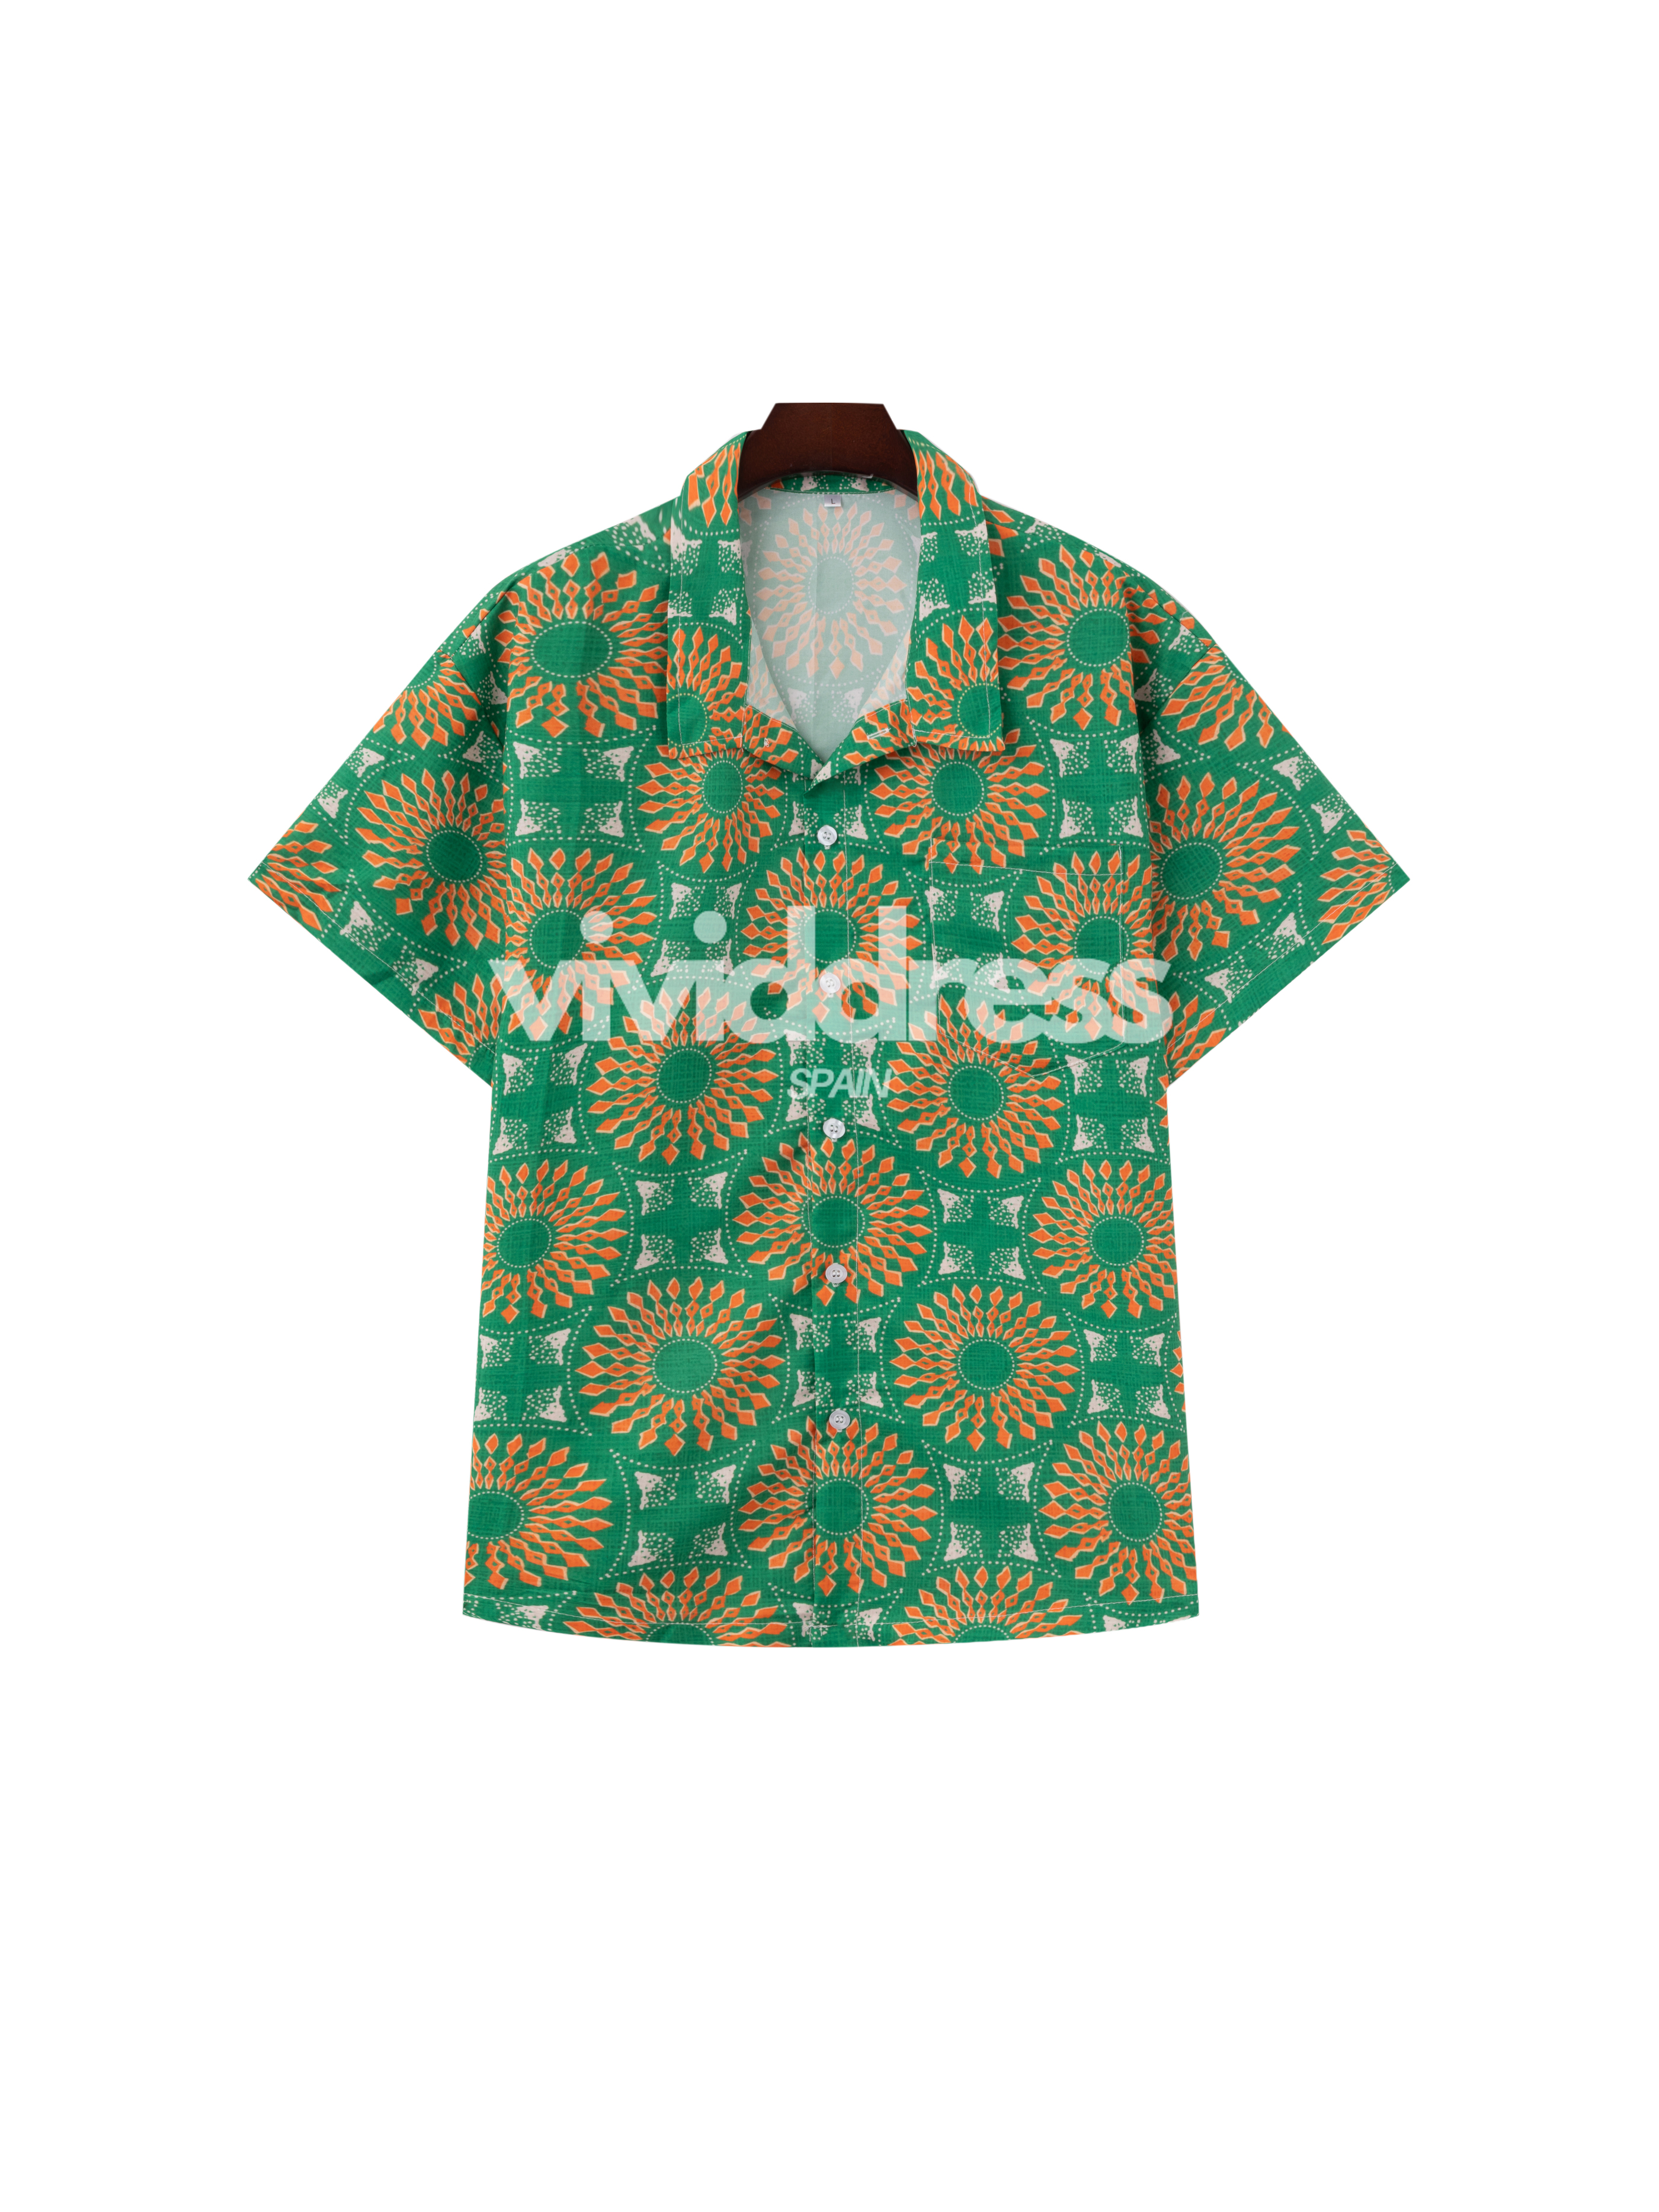 Men's Floral Print Green Hawaiian Holiday Short Sleeve Shirt